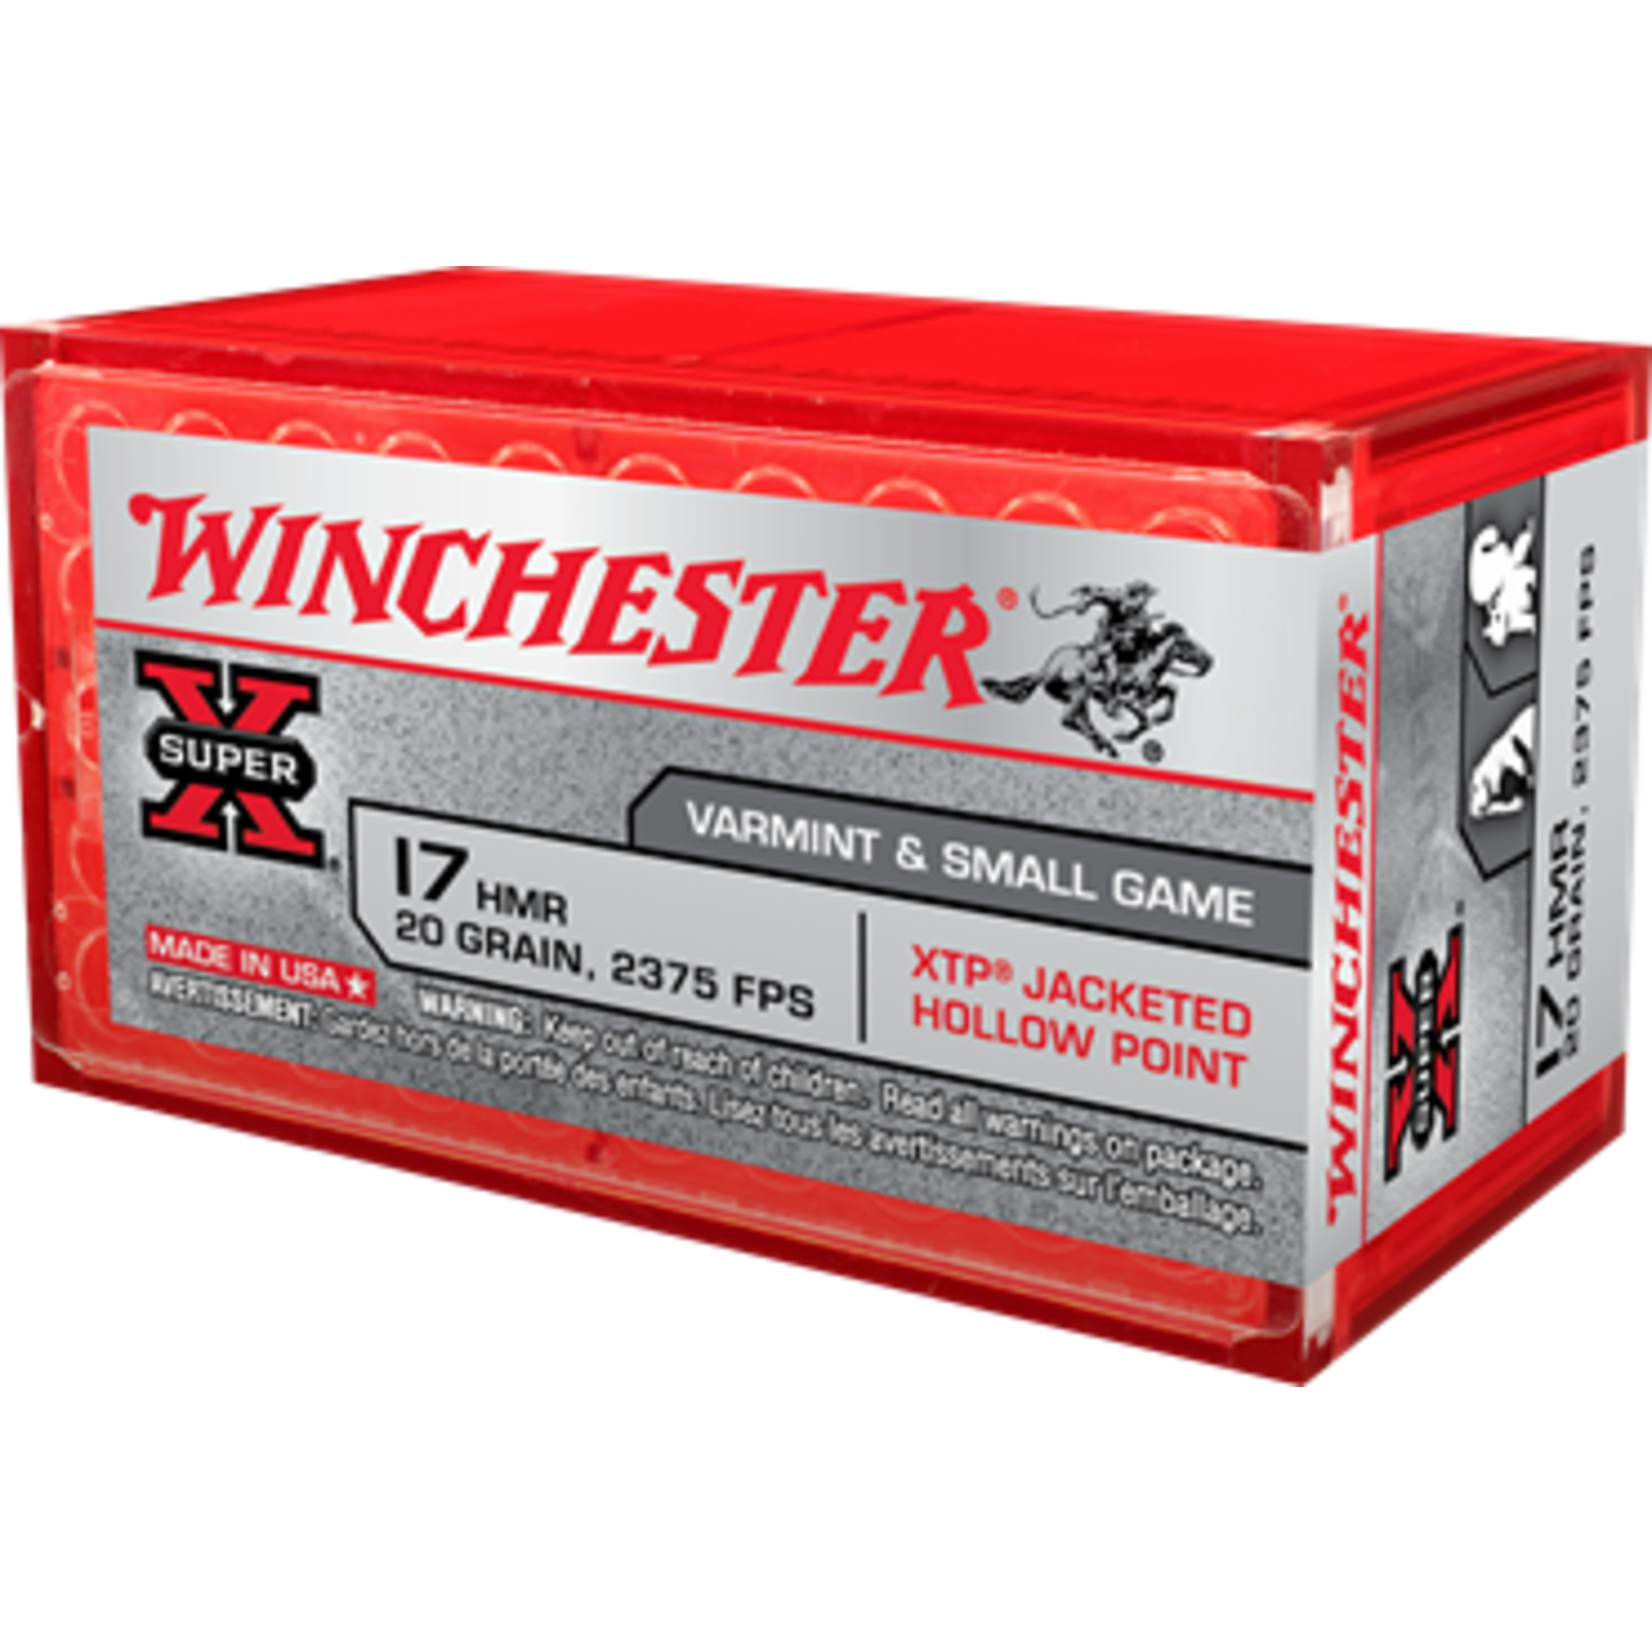 Winchester Winchester 17hmr 20gr - XTP 2375fps - 50 Pack